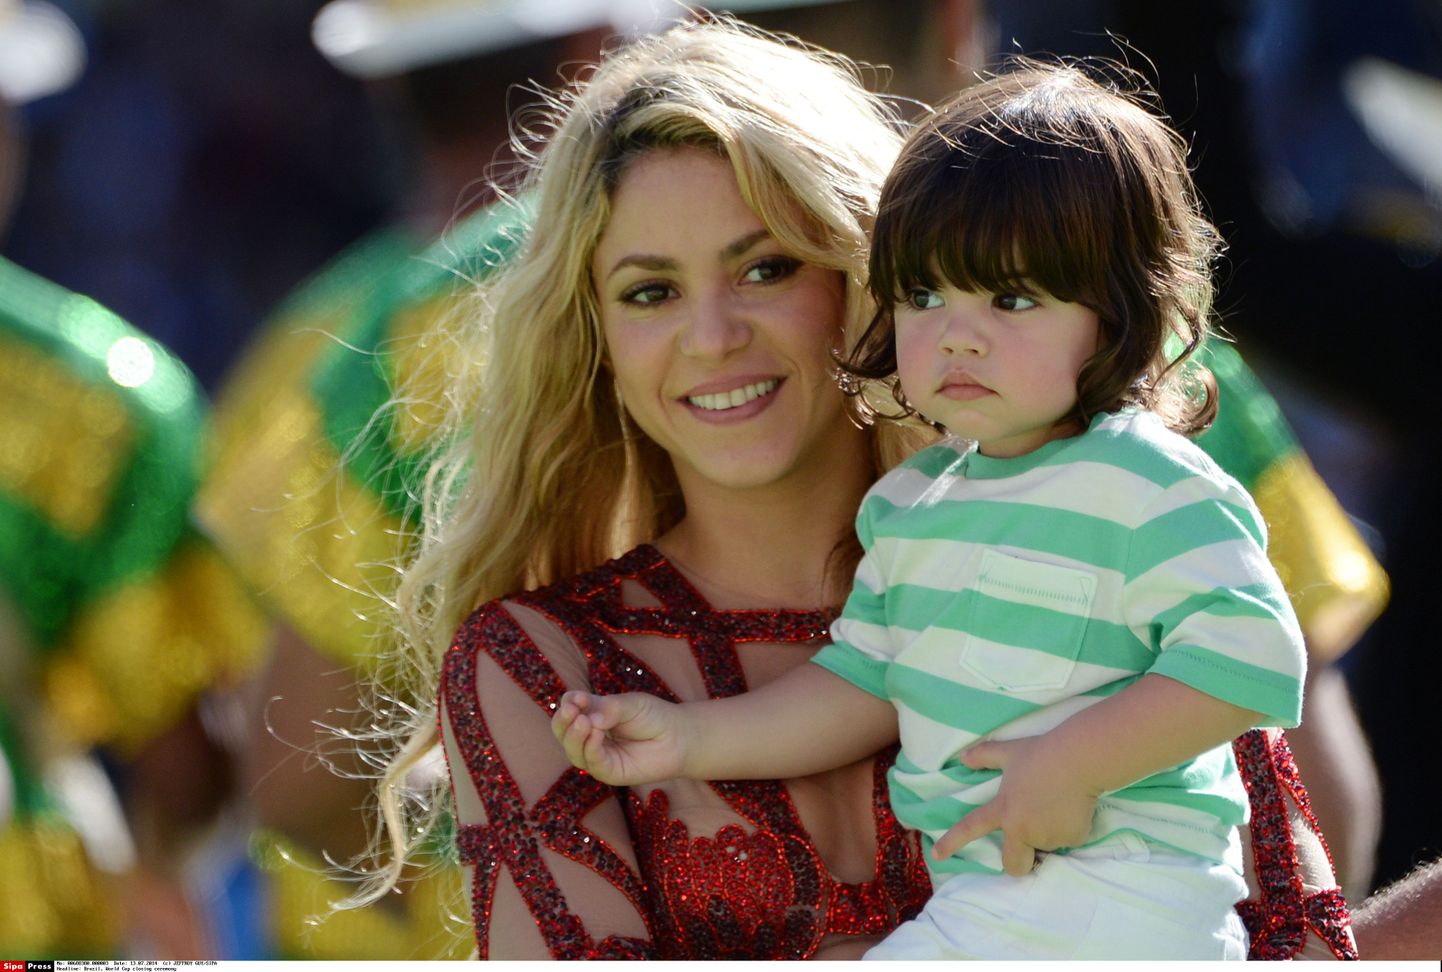 Shakira and his son's Milan during closing ceremony before the Football World Cup game, Final, Germany vs Argentina at Estadio Maracana, Rio de Janeiro, Brazil  - 13/07/2014/JEFFROYGUY_clos_03/Credit:JEFFROY GUY/SIPA/1407141243